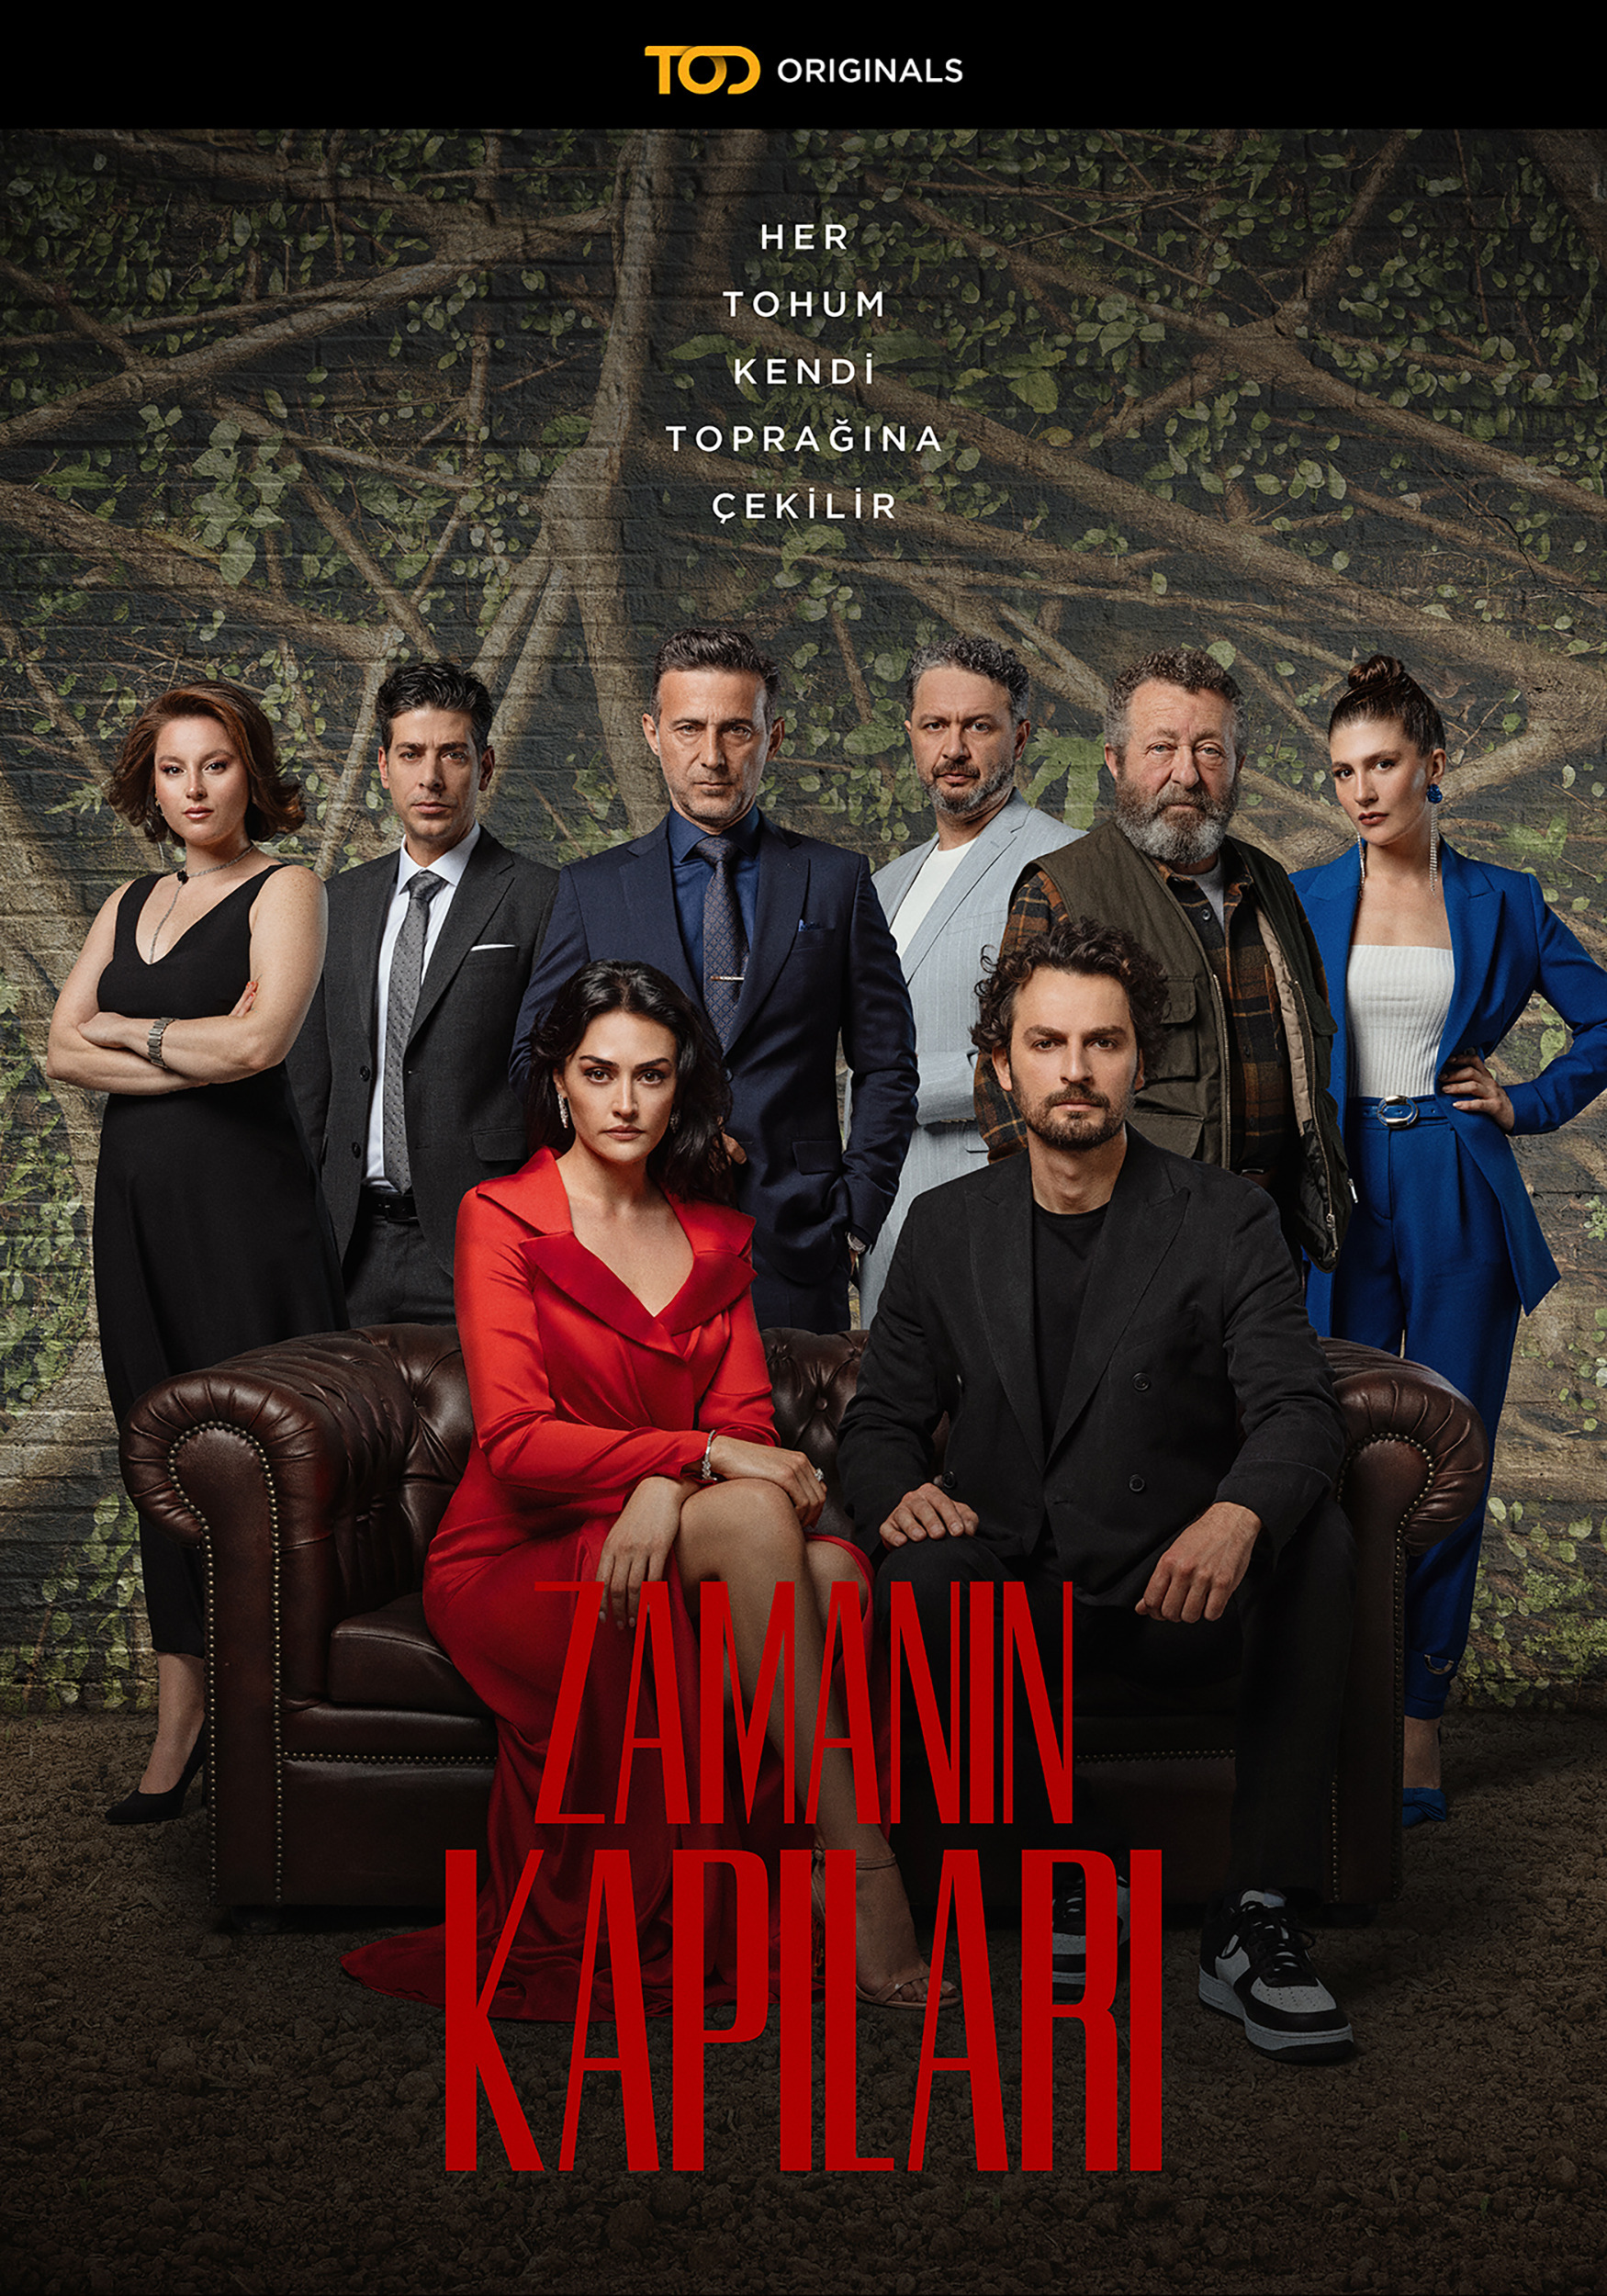 Mega Sized TV Poster Image for Zamanin Kapilari (#2 of 4)